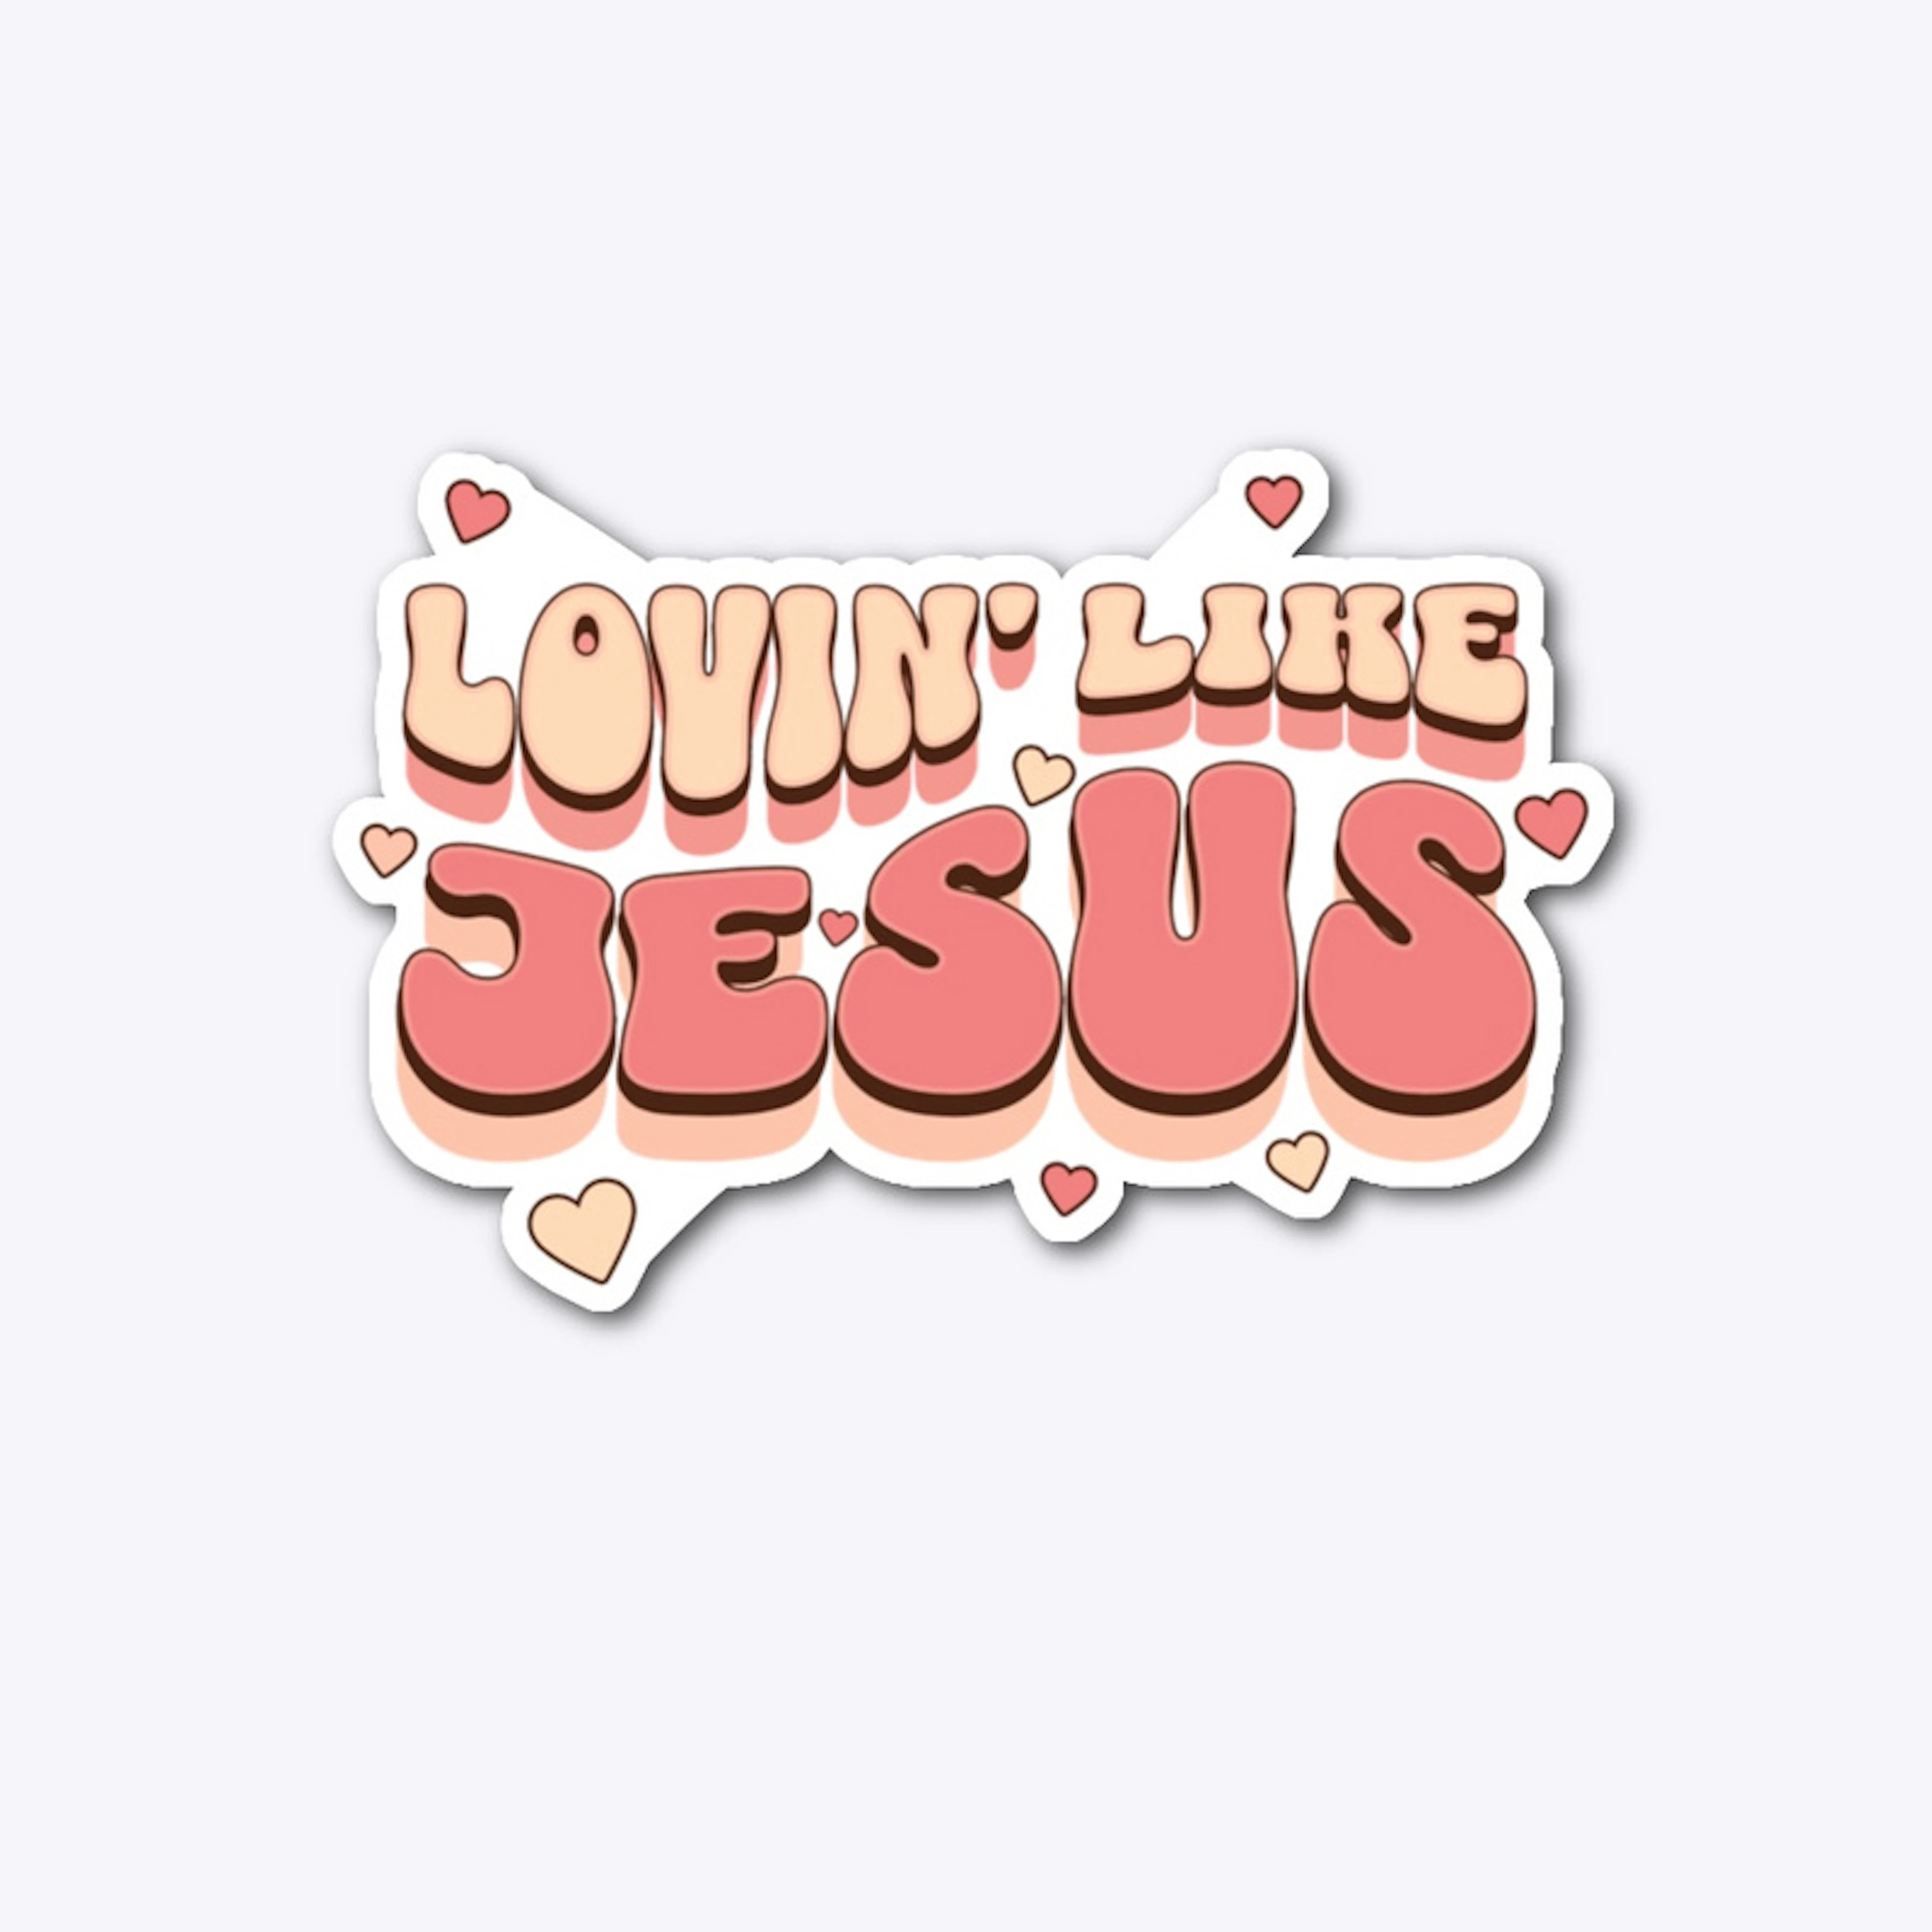 Lovin' Like Jesus